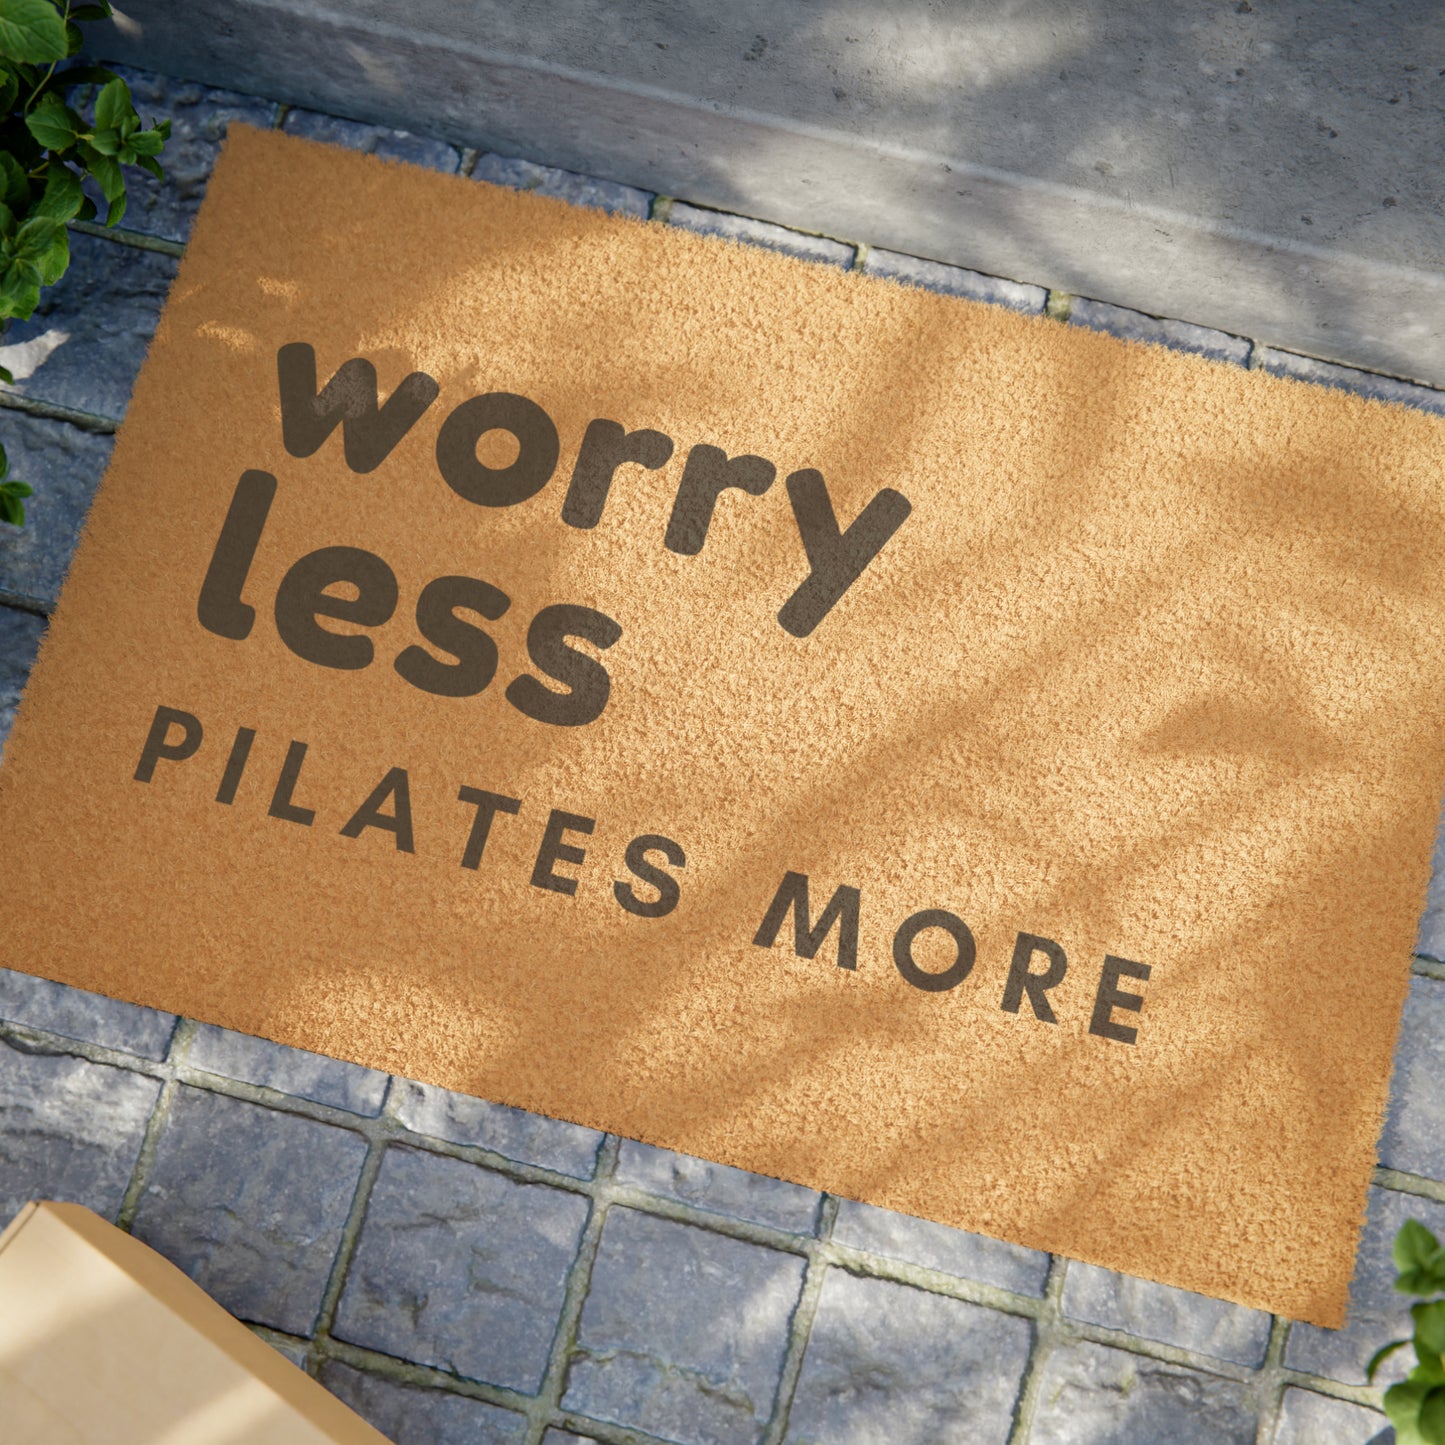 Worry Less Pilates More - Pilates Doormat